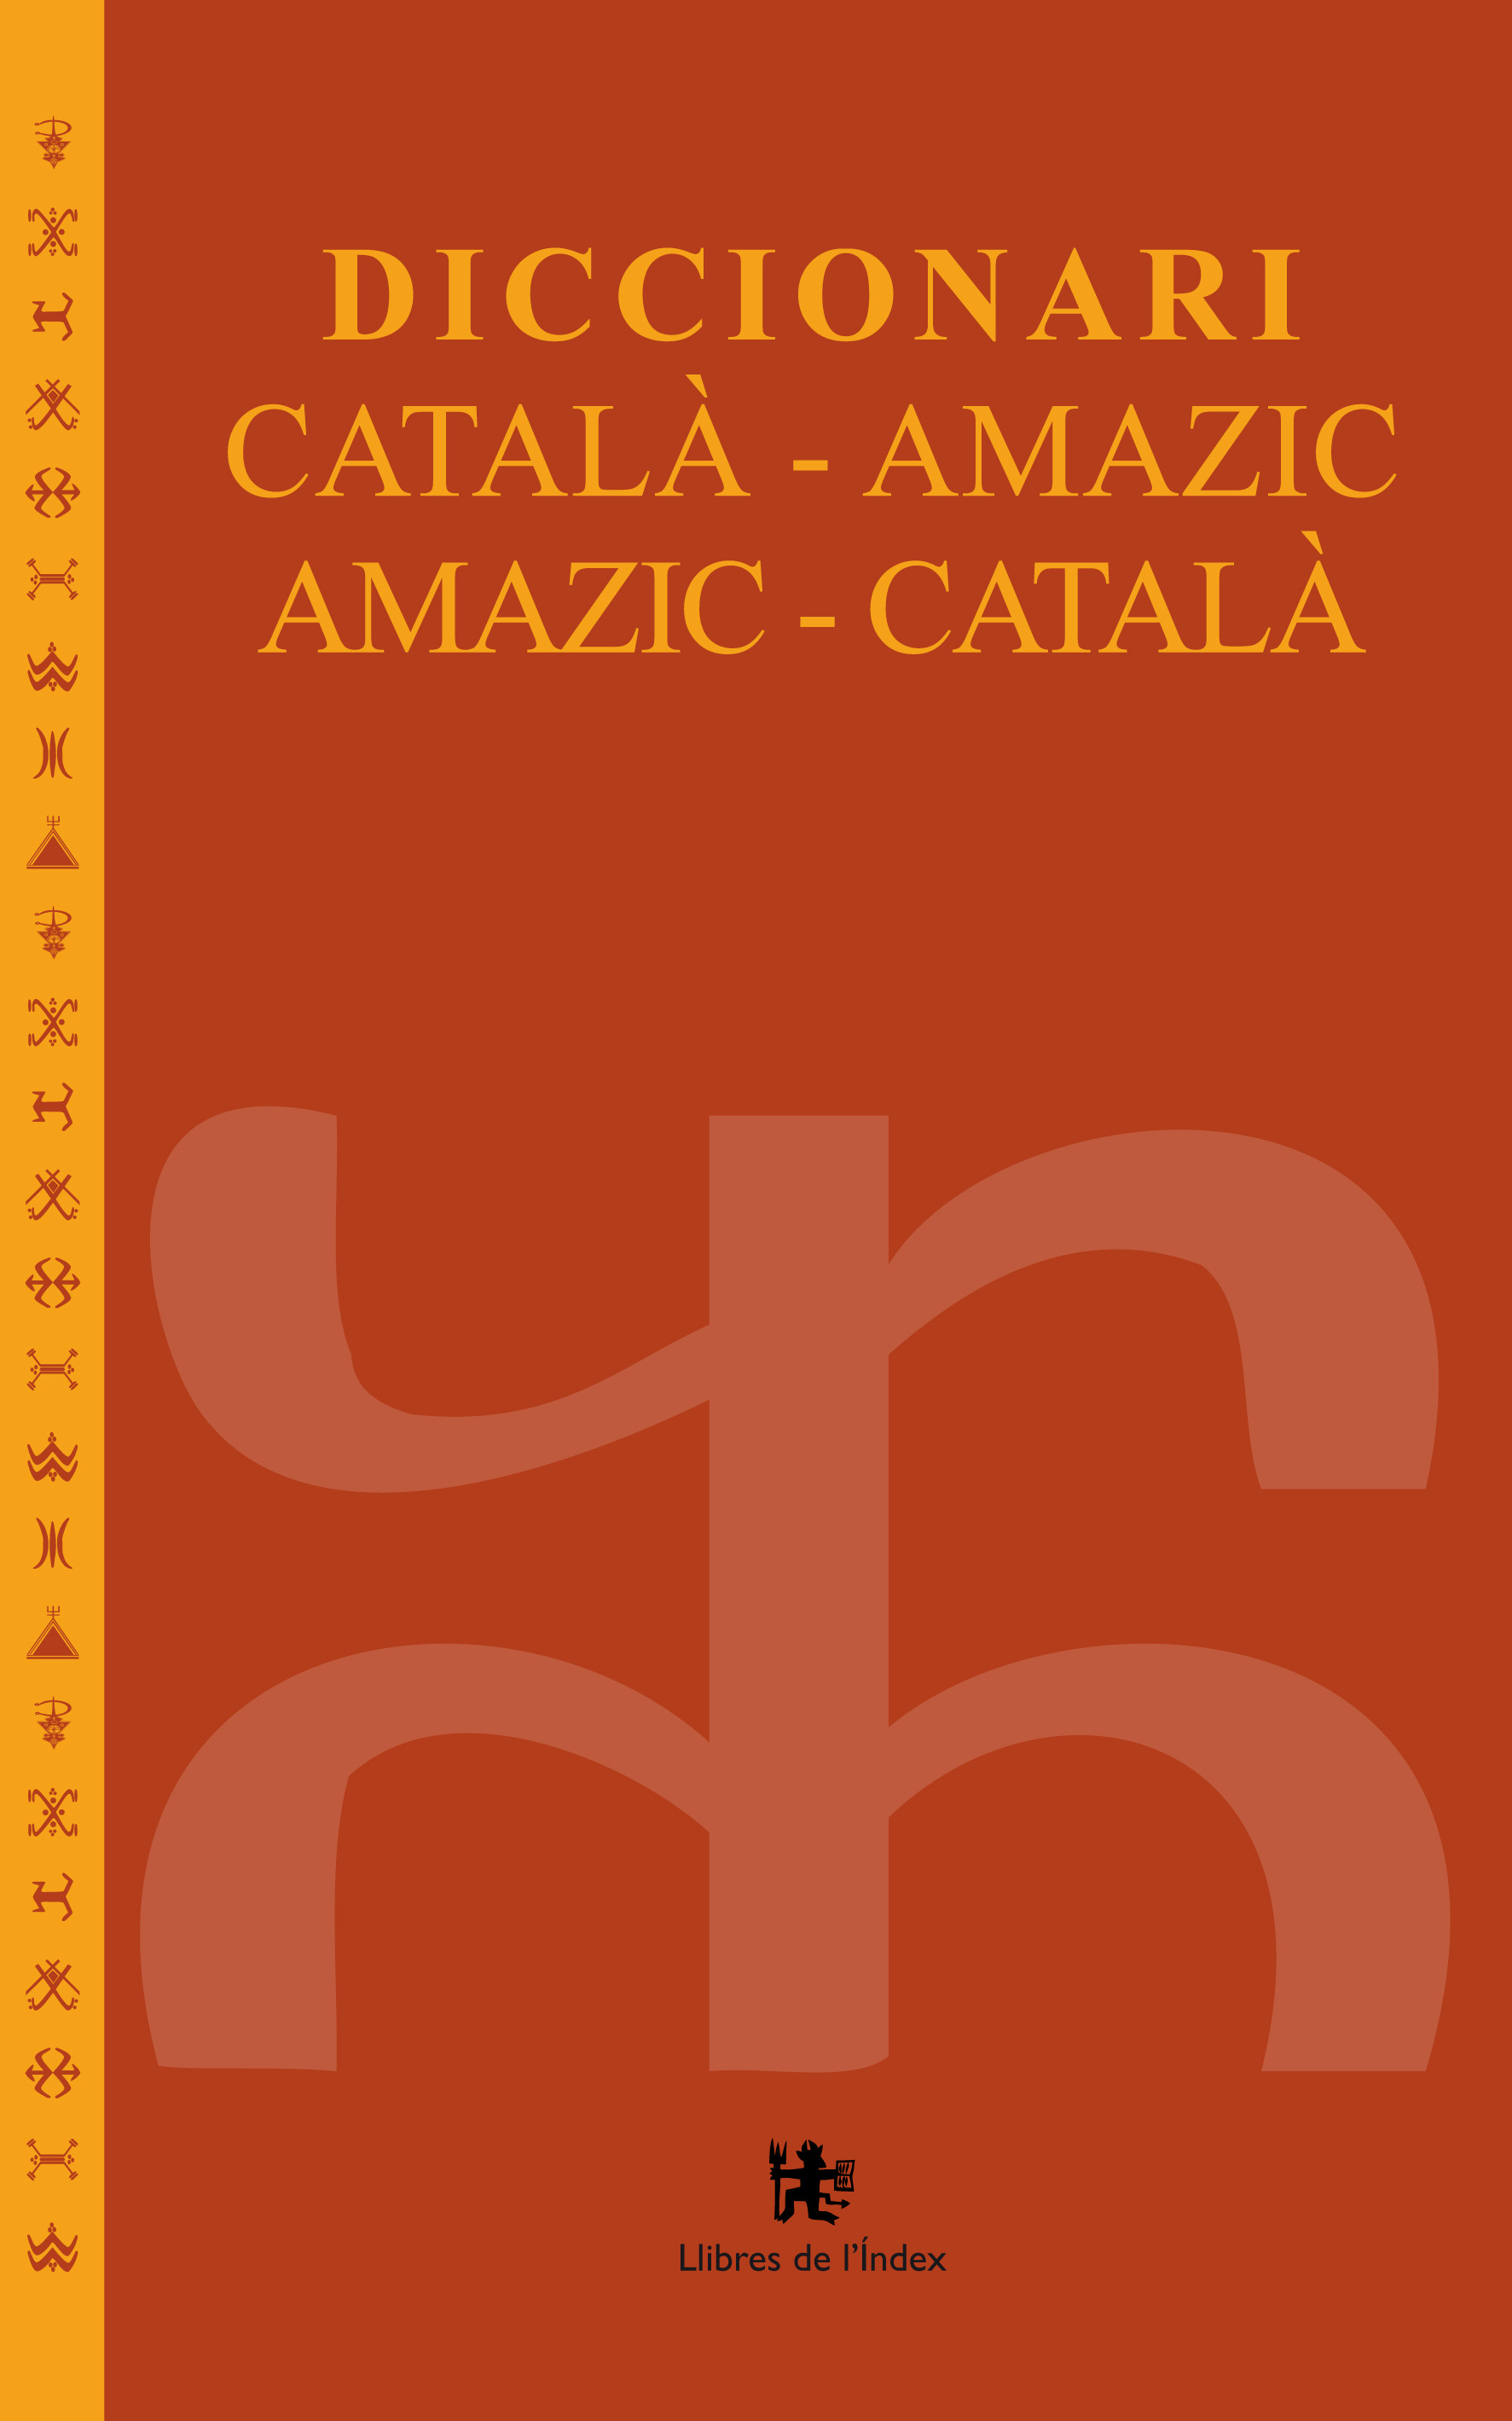 Diccionari catalá-amazic/amazic-catalá